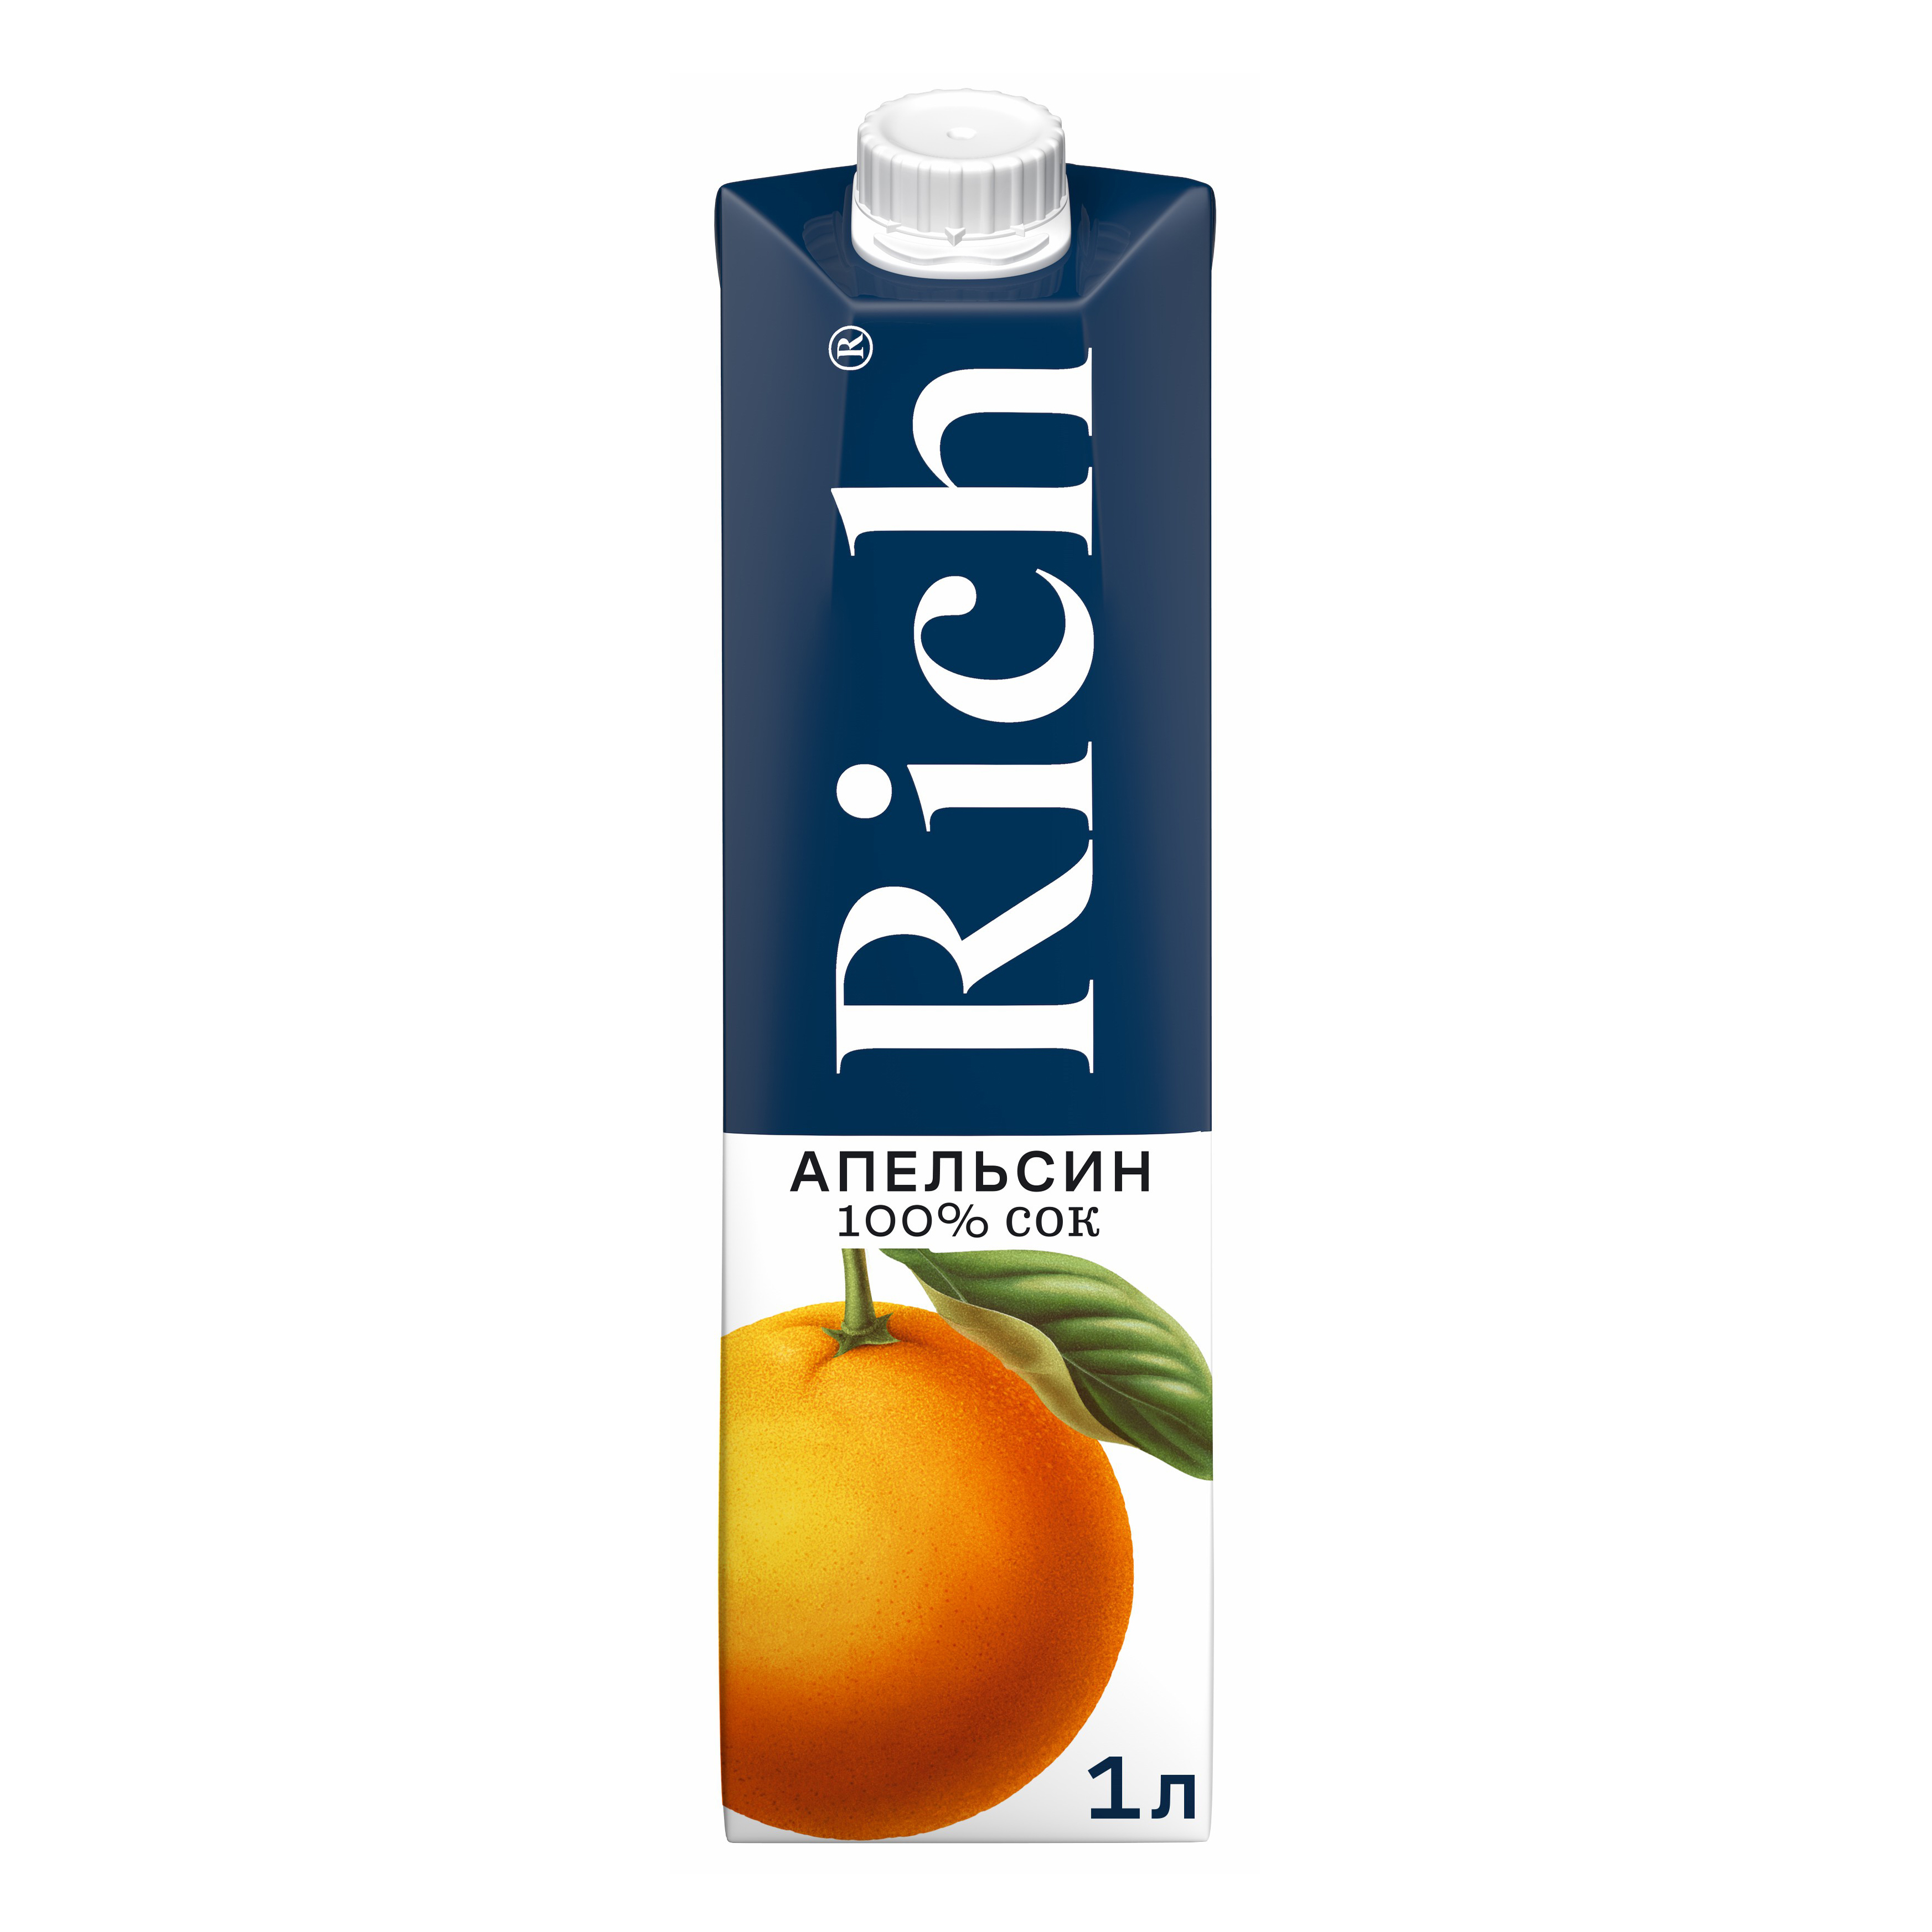 Состав сока рич. Сок Rich манго апельсин. Нектар Рич манго-апельсин 1л. Сок Rich томат 1л. Нектар Rich апельсин манго 1л.